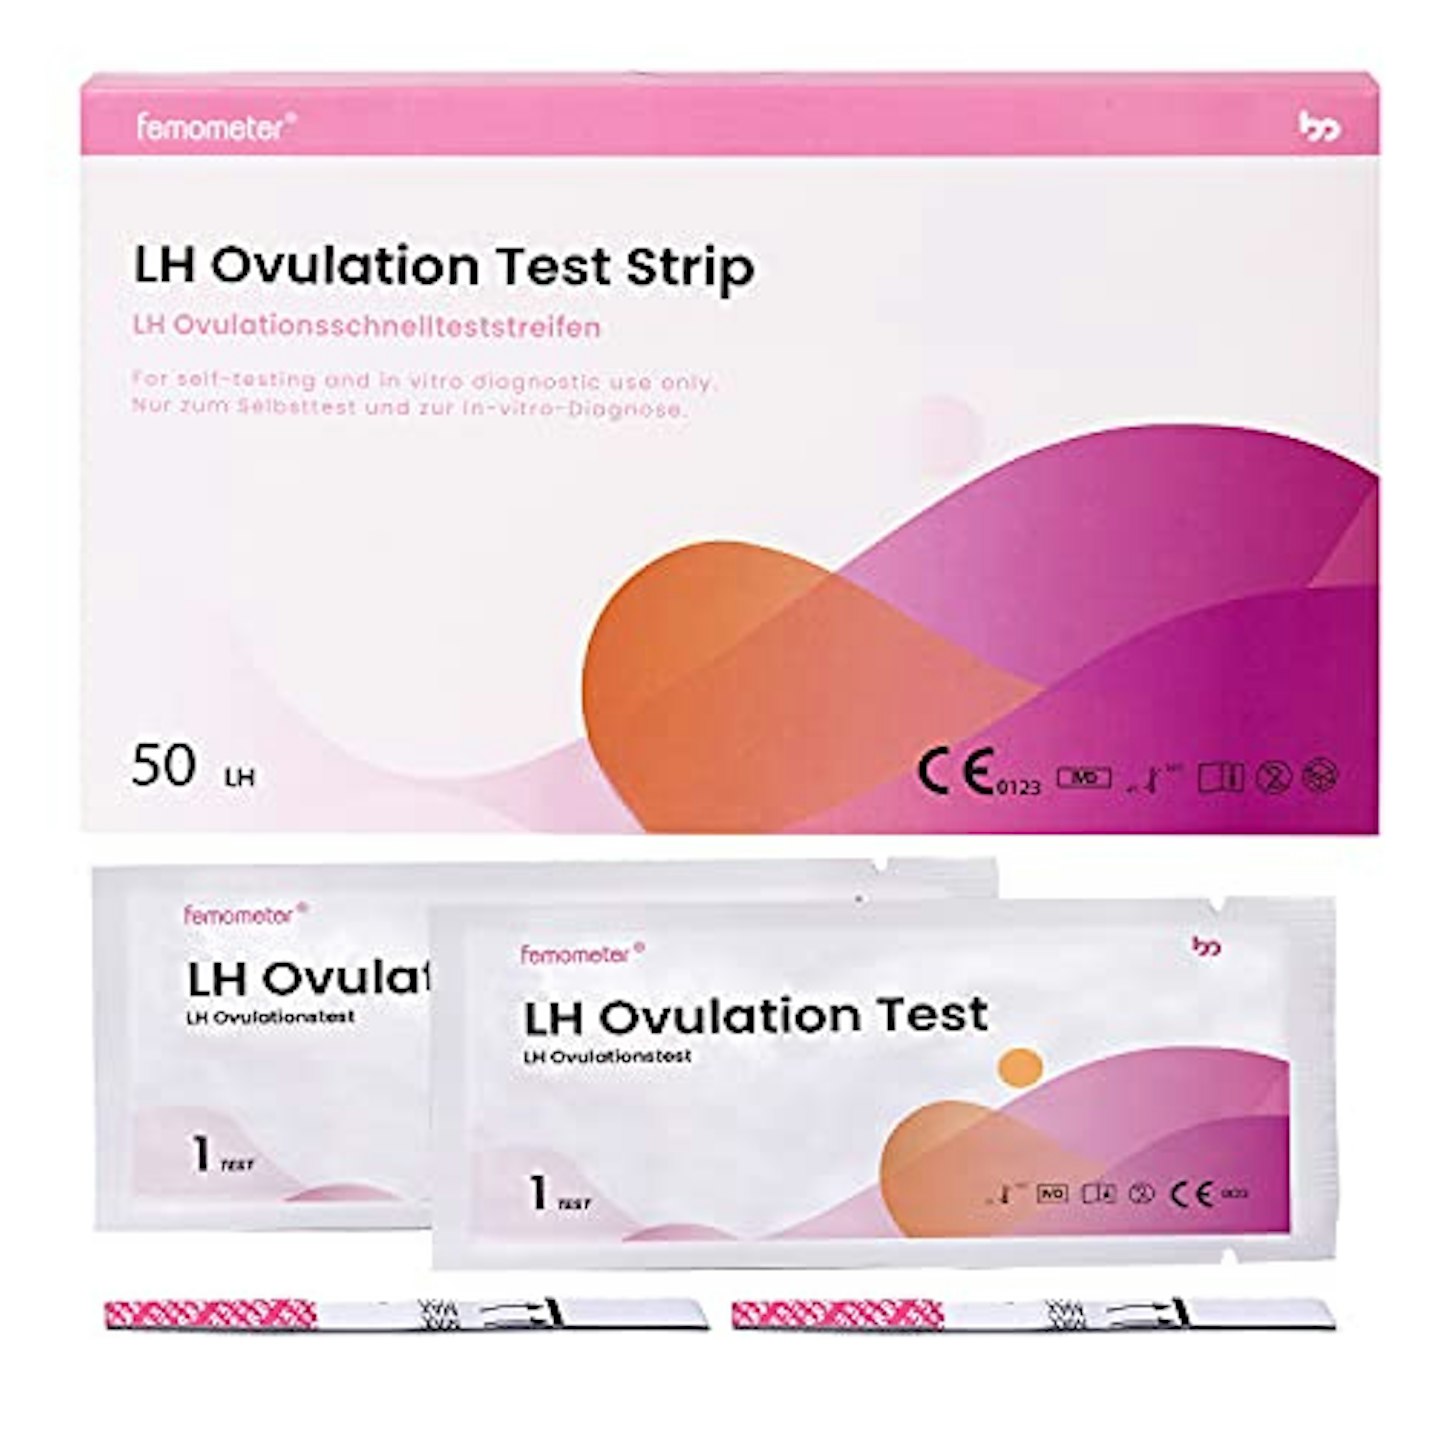 Femometer Ovulation Test Strips Kit